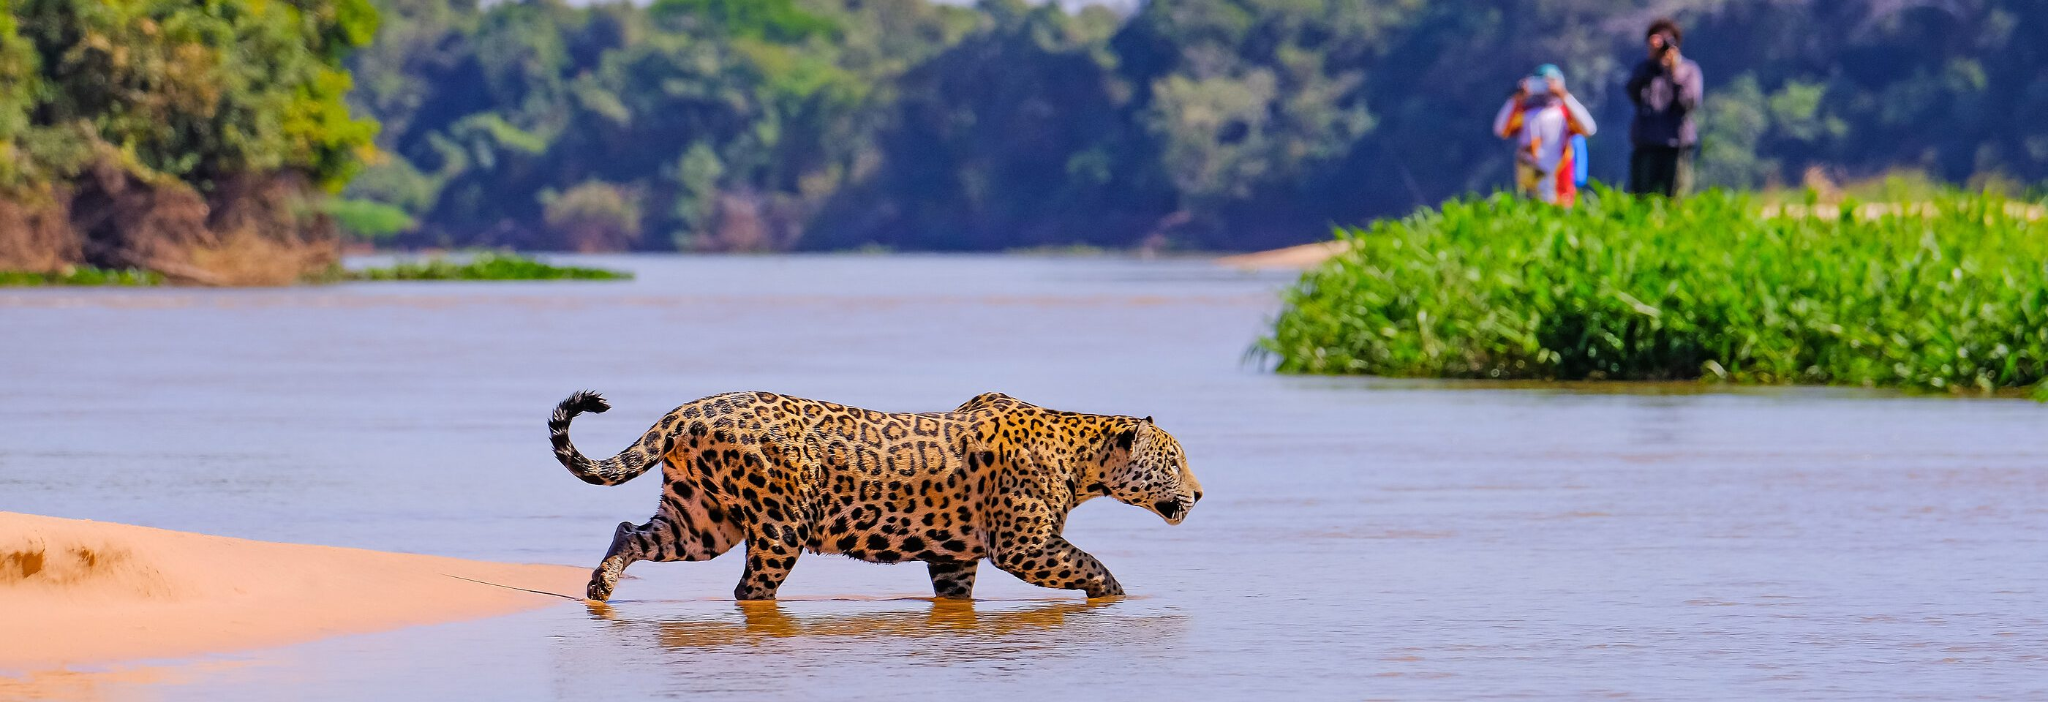 Animal in the Brazilian jungle